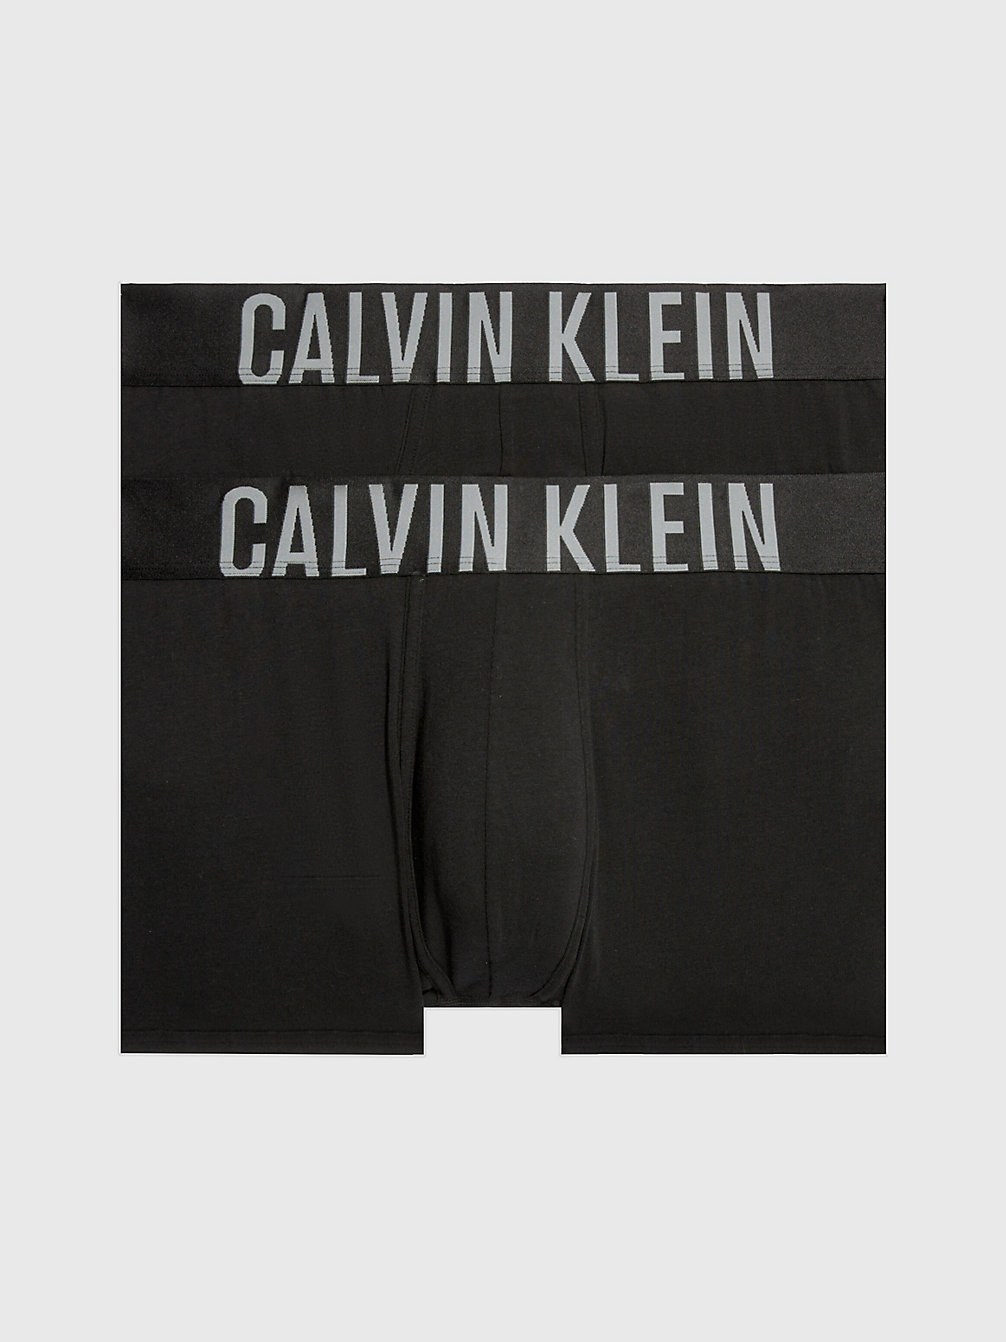 BLACK > 2 Pary Bokserek - Intense Power > undefined Mężczyźni - Calvin Klein